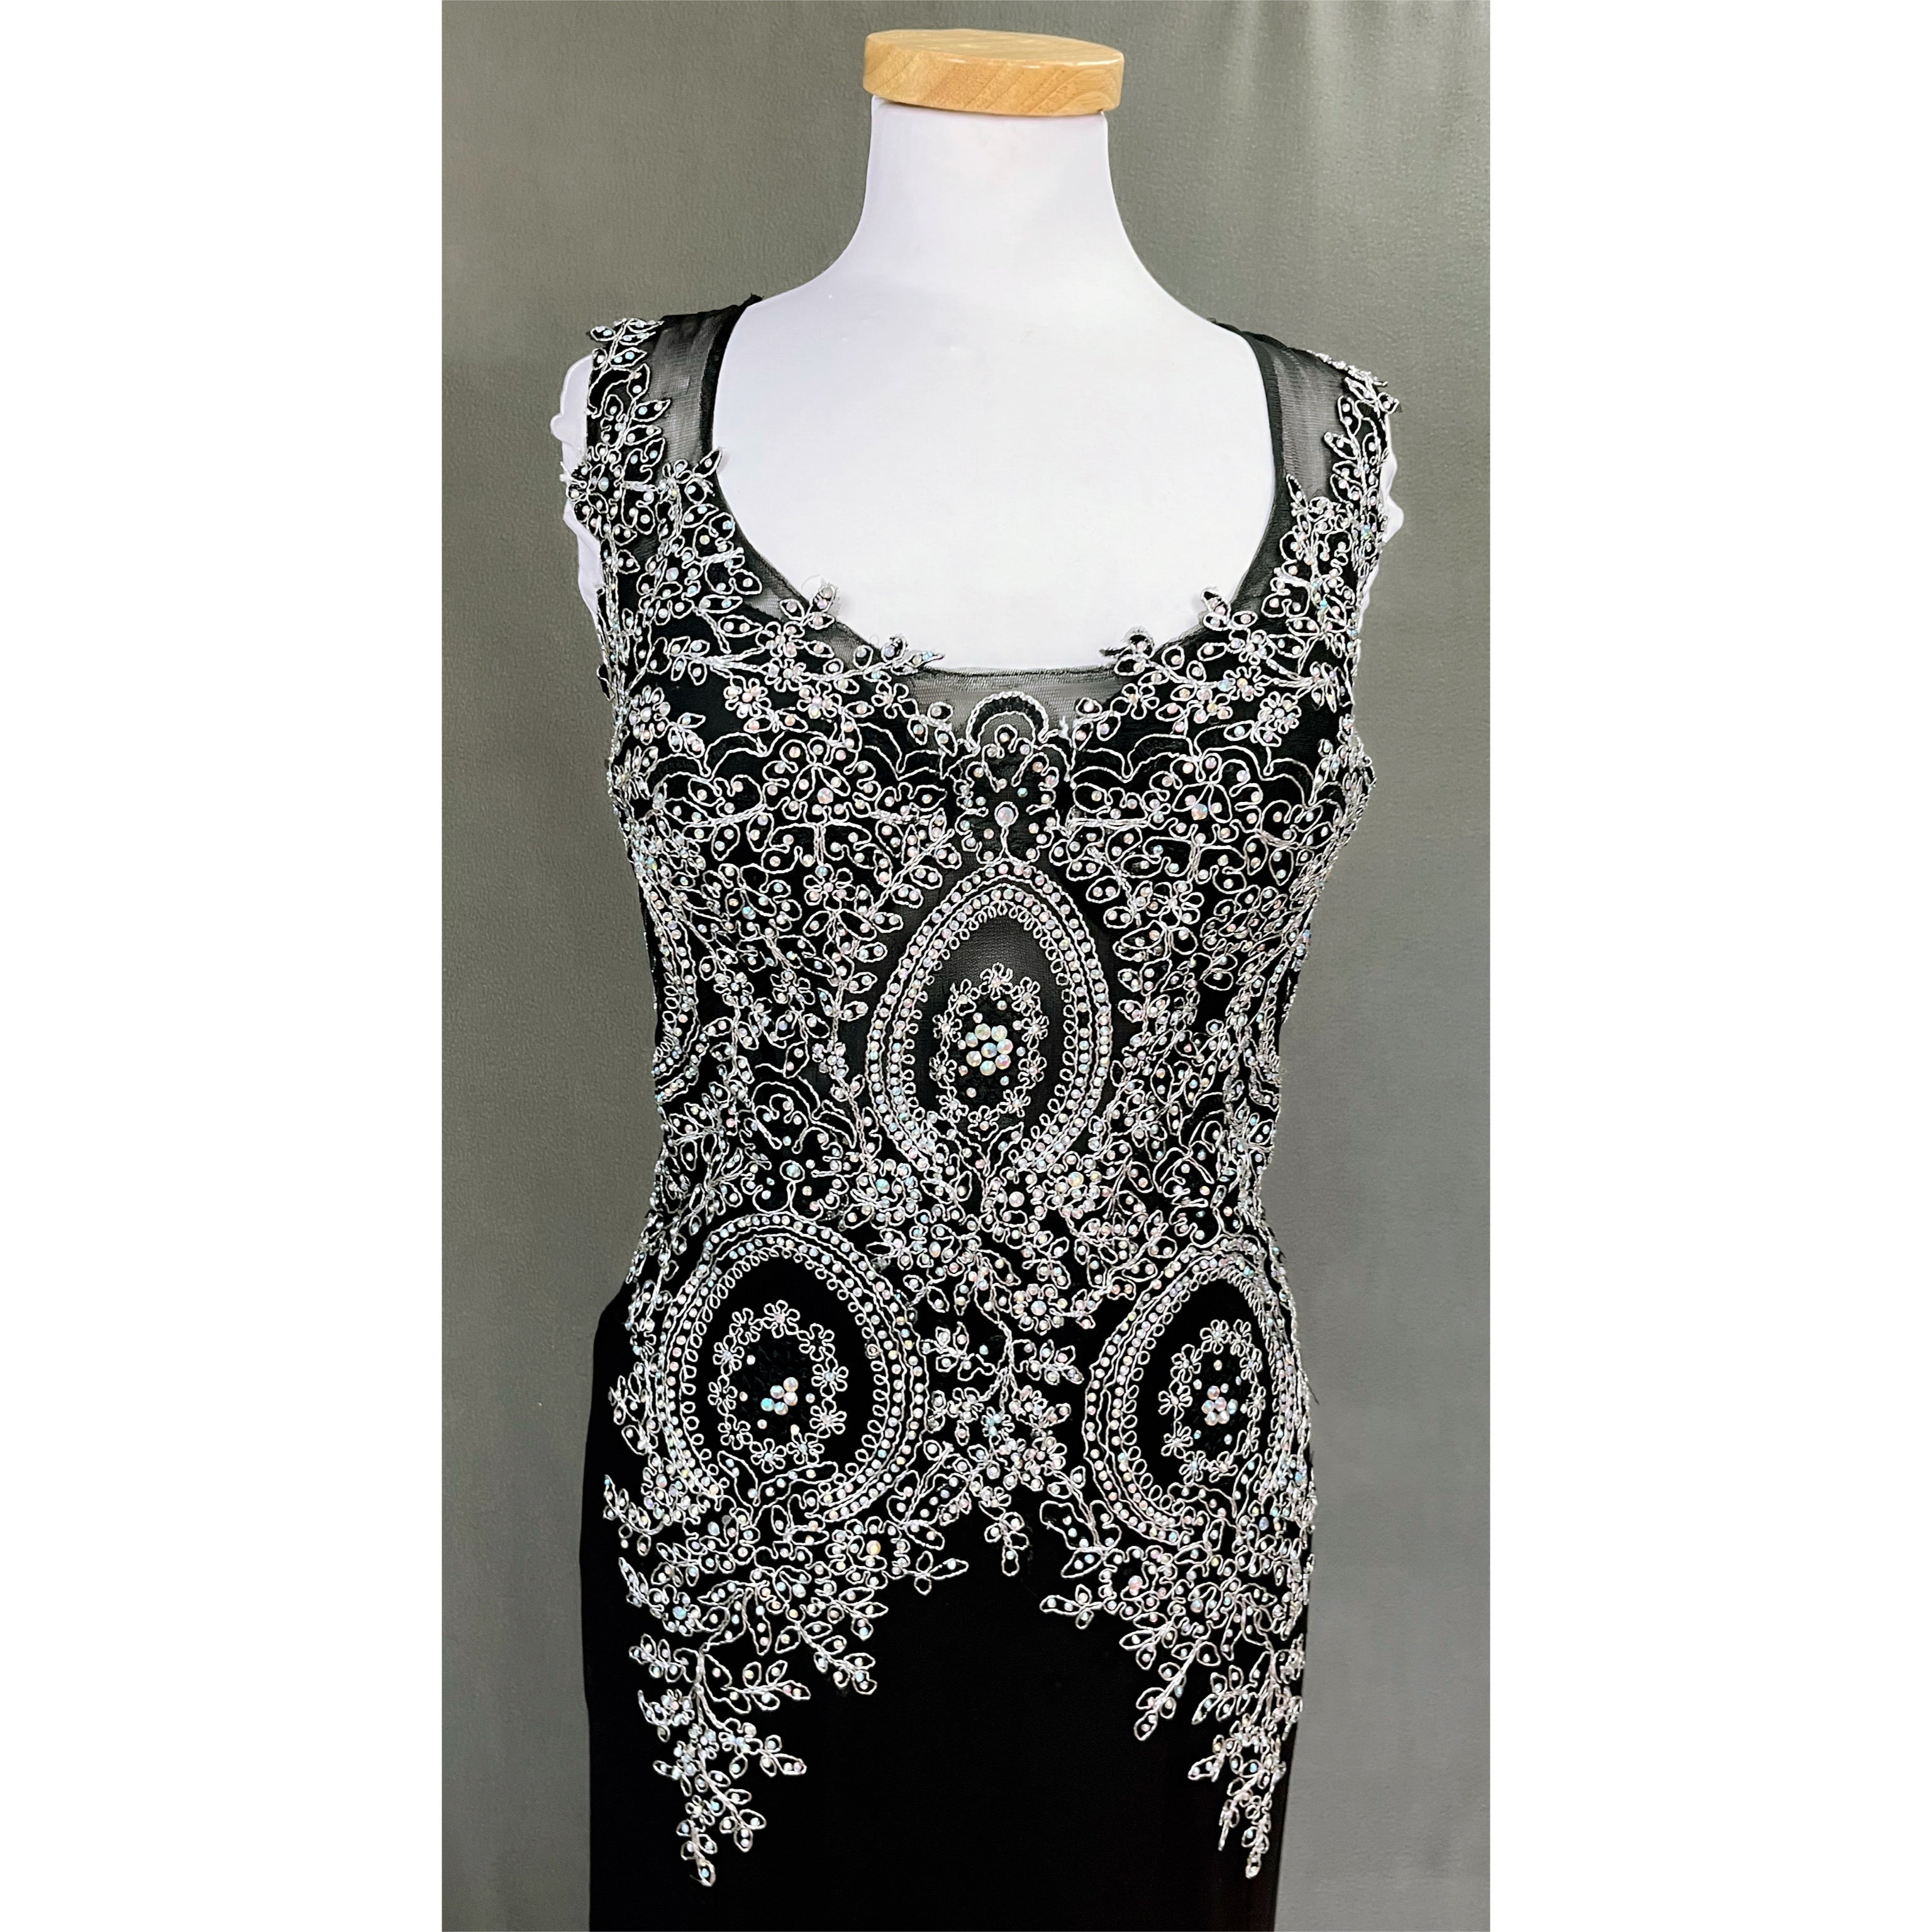 Cindy USA black dress with silver, size XL